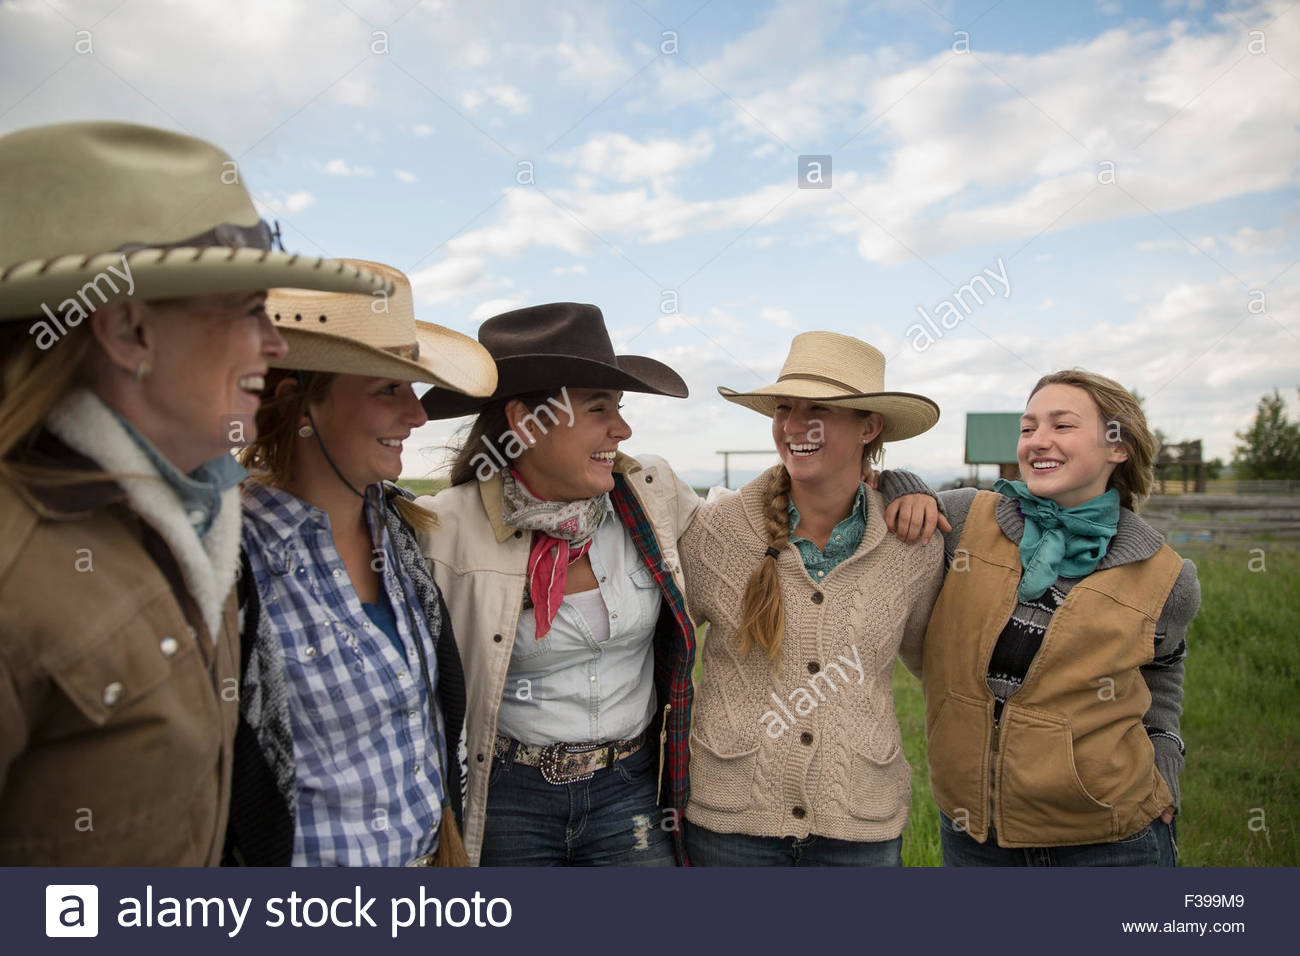 Female ranchers bonding Stock Photo